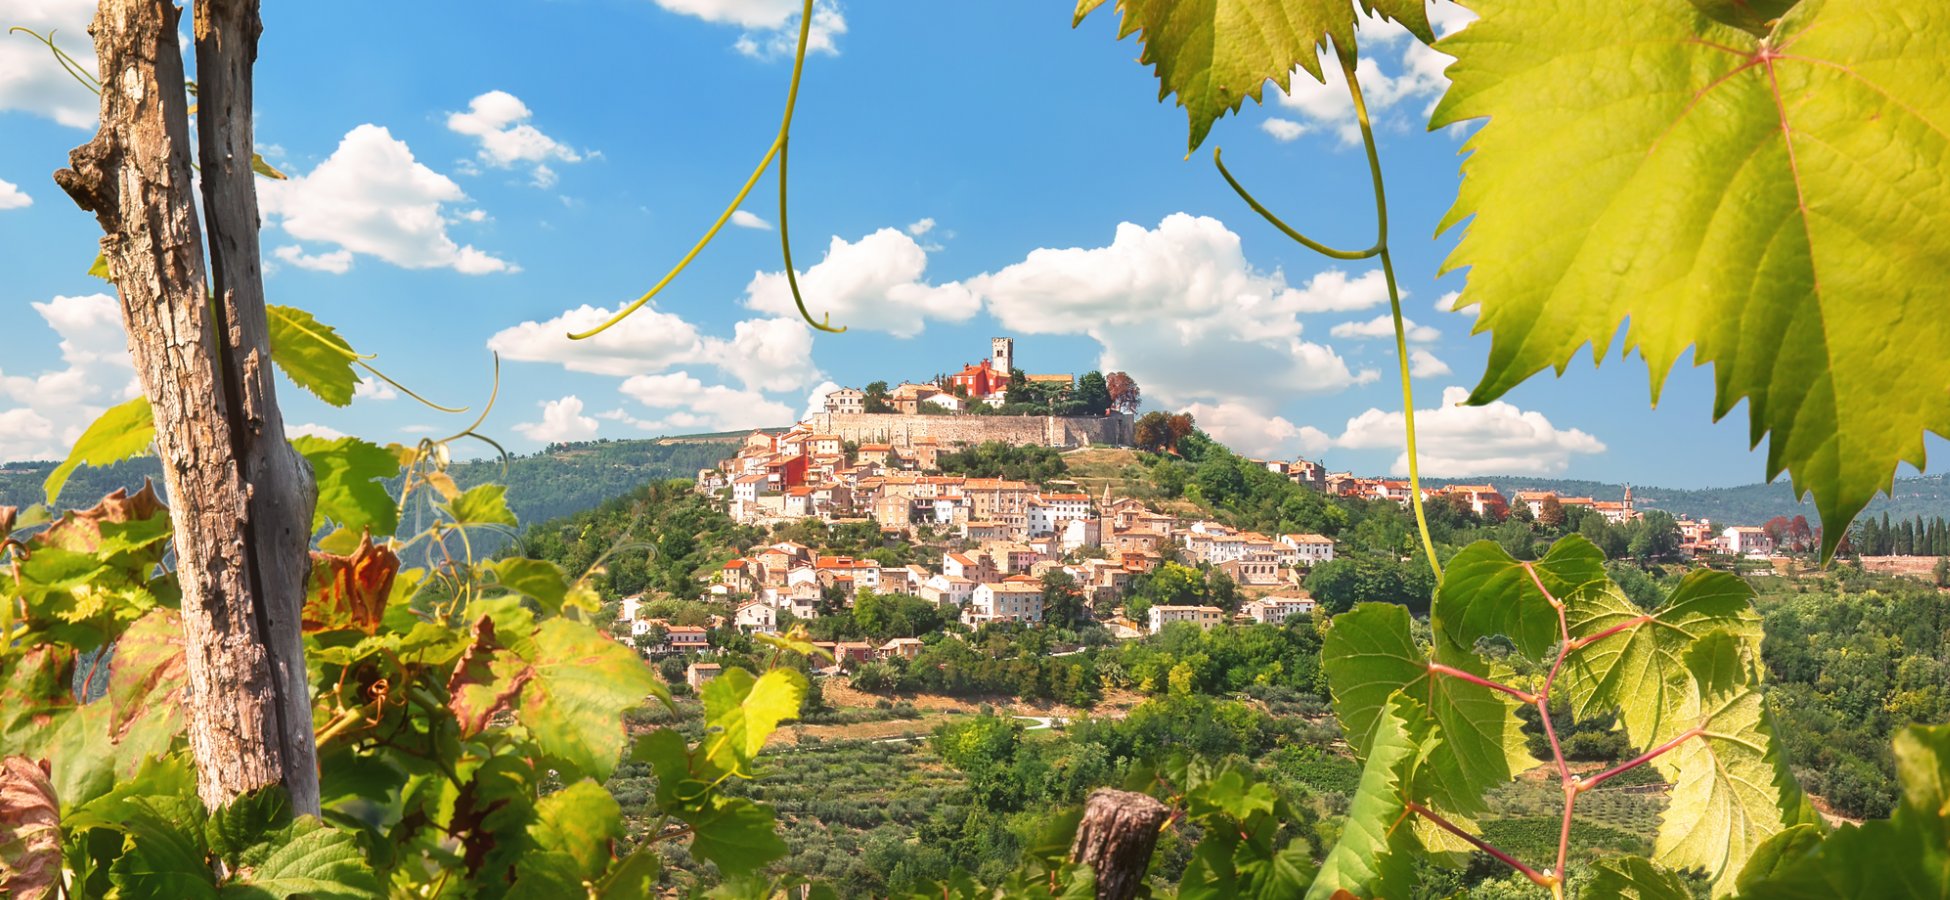 Scenic view to the town of Motovun, Istria, Croatia &copy; e_polischuk - stock.adobe.com